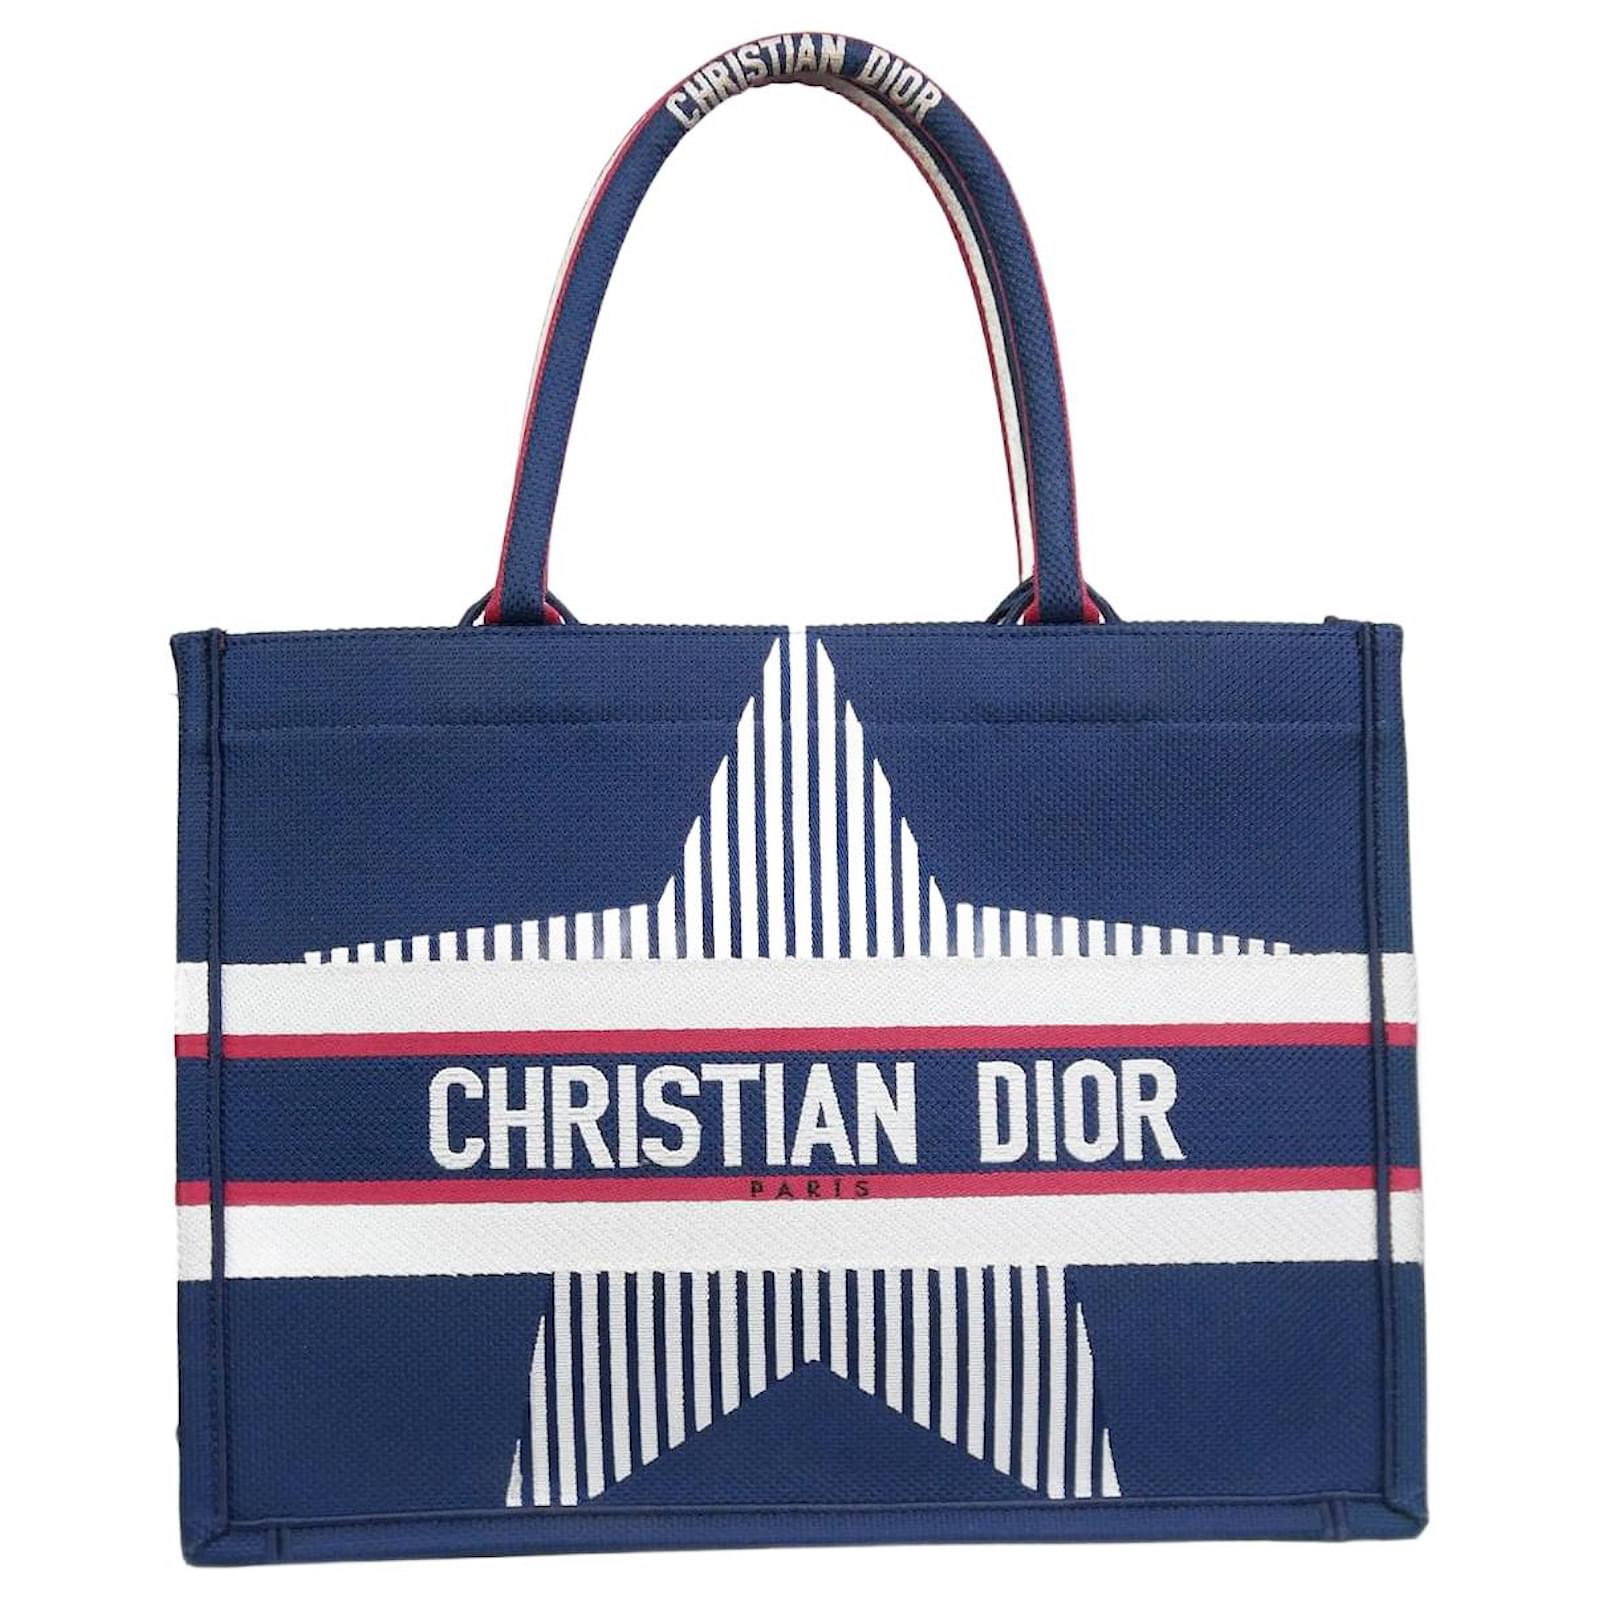 christian dior tote bag blue